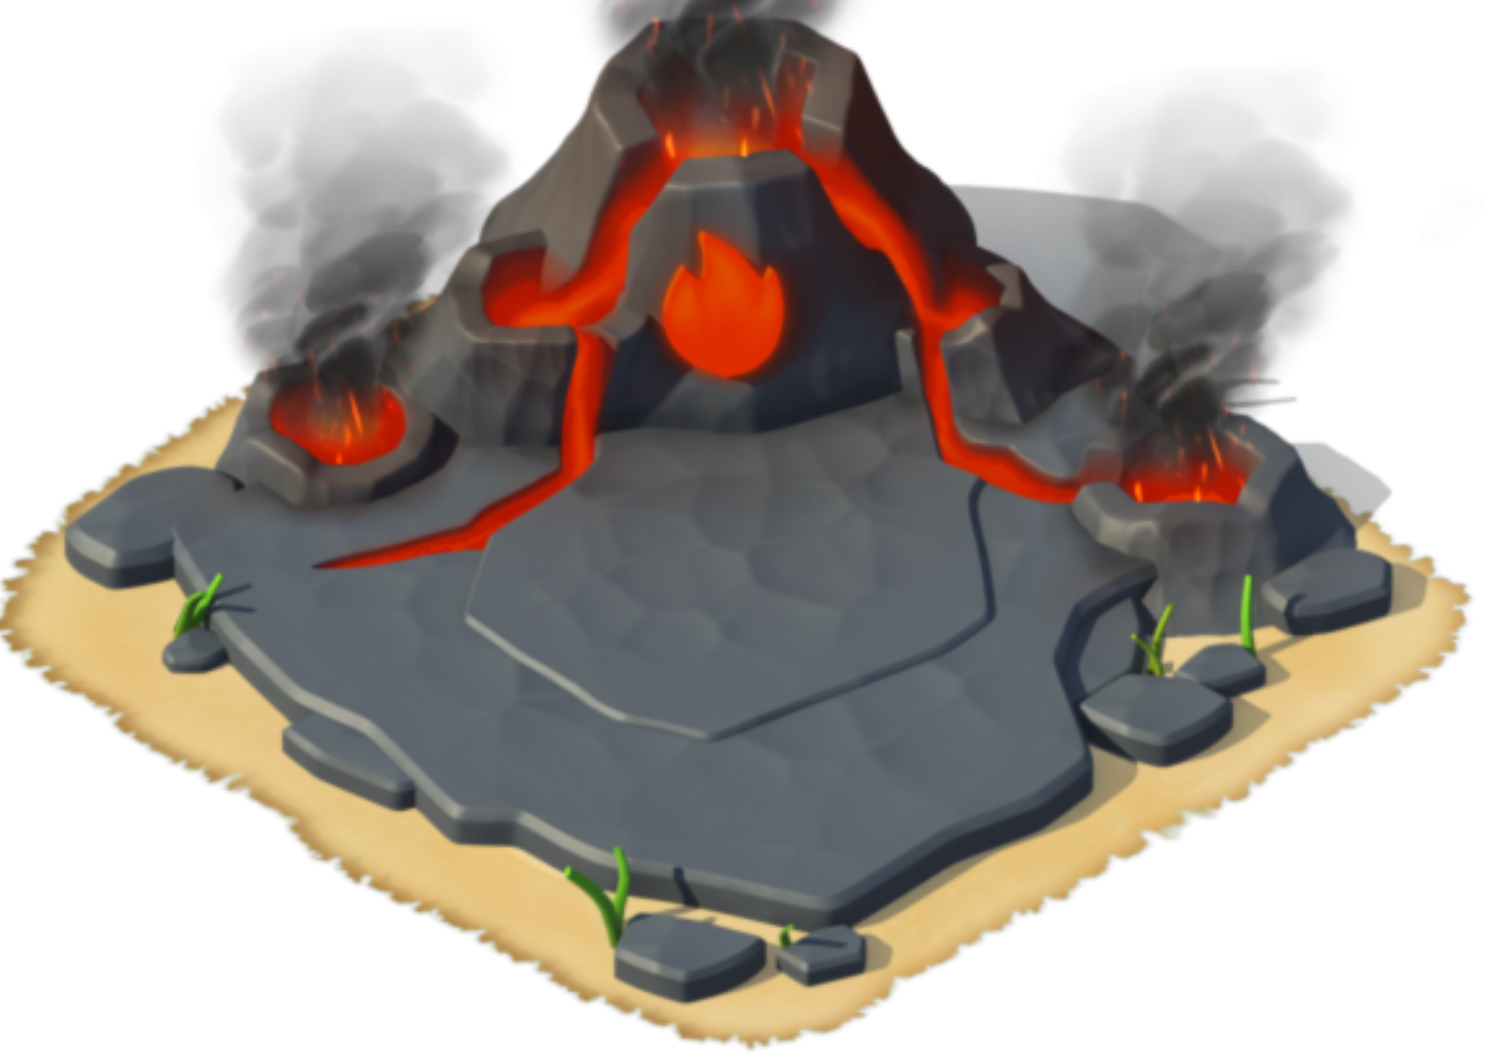 upgrade habitat to level 7 dragon mania legends